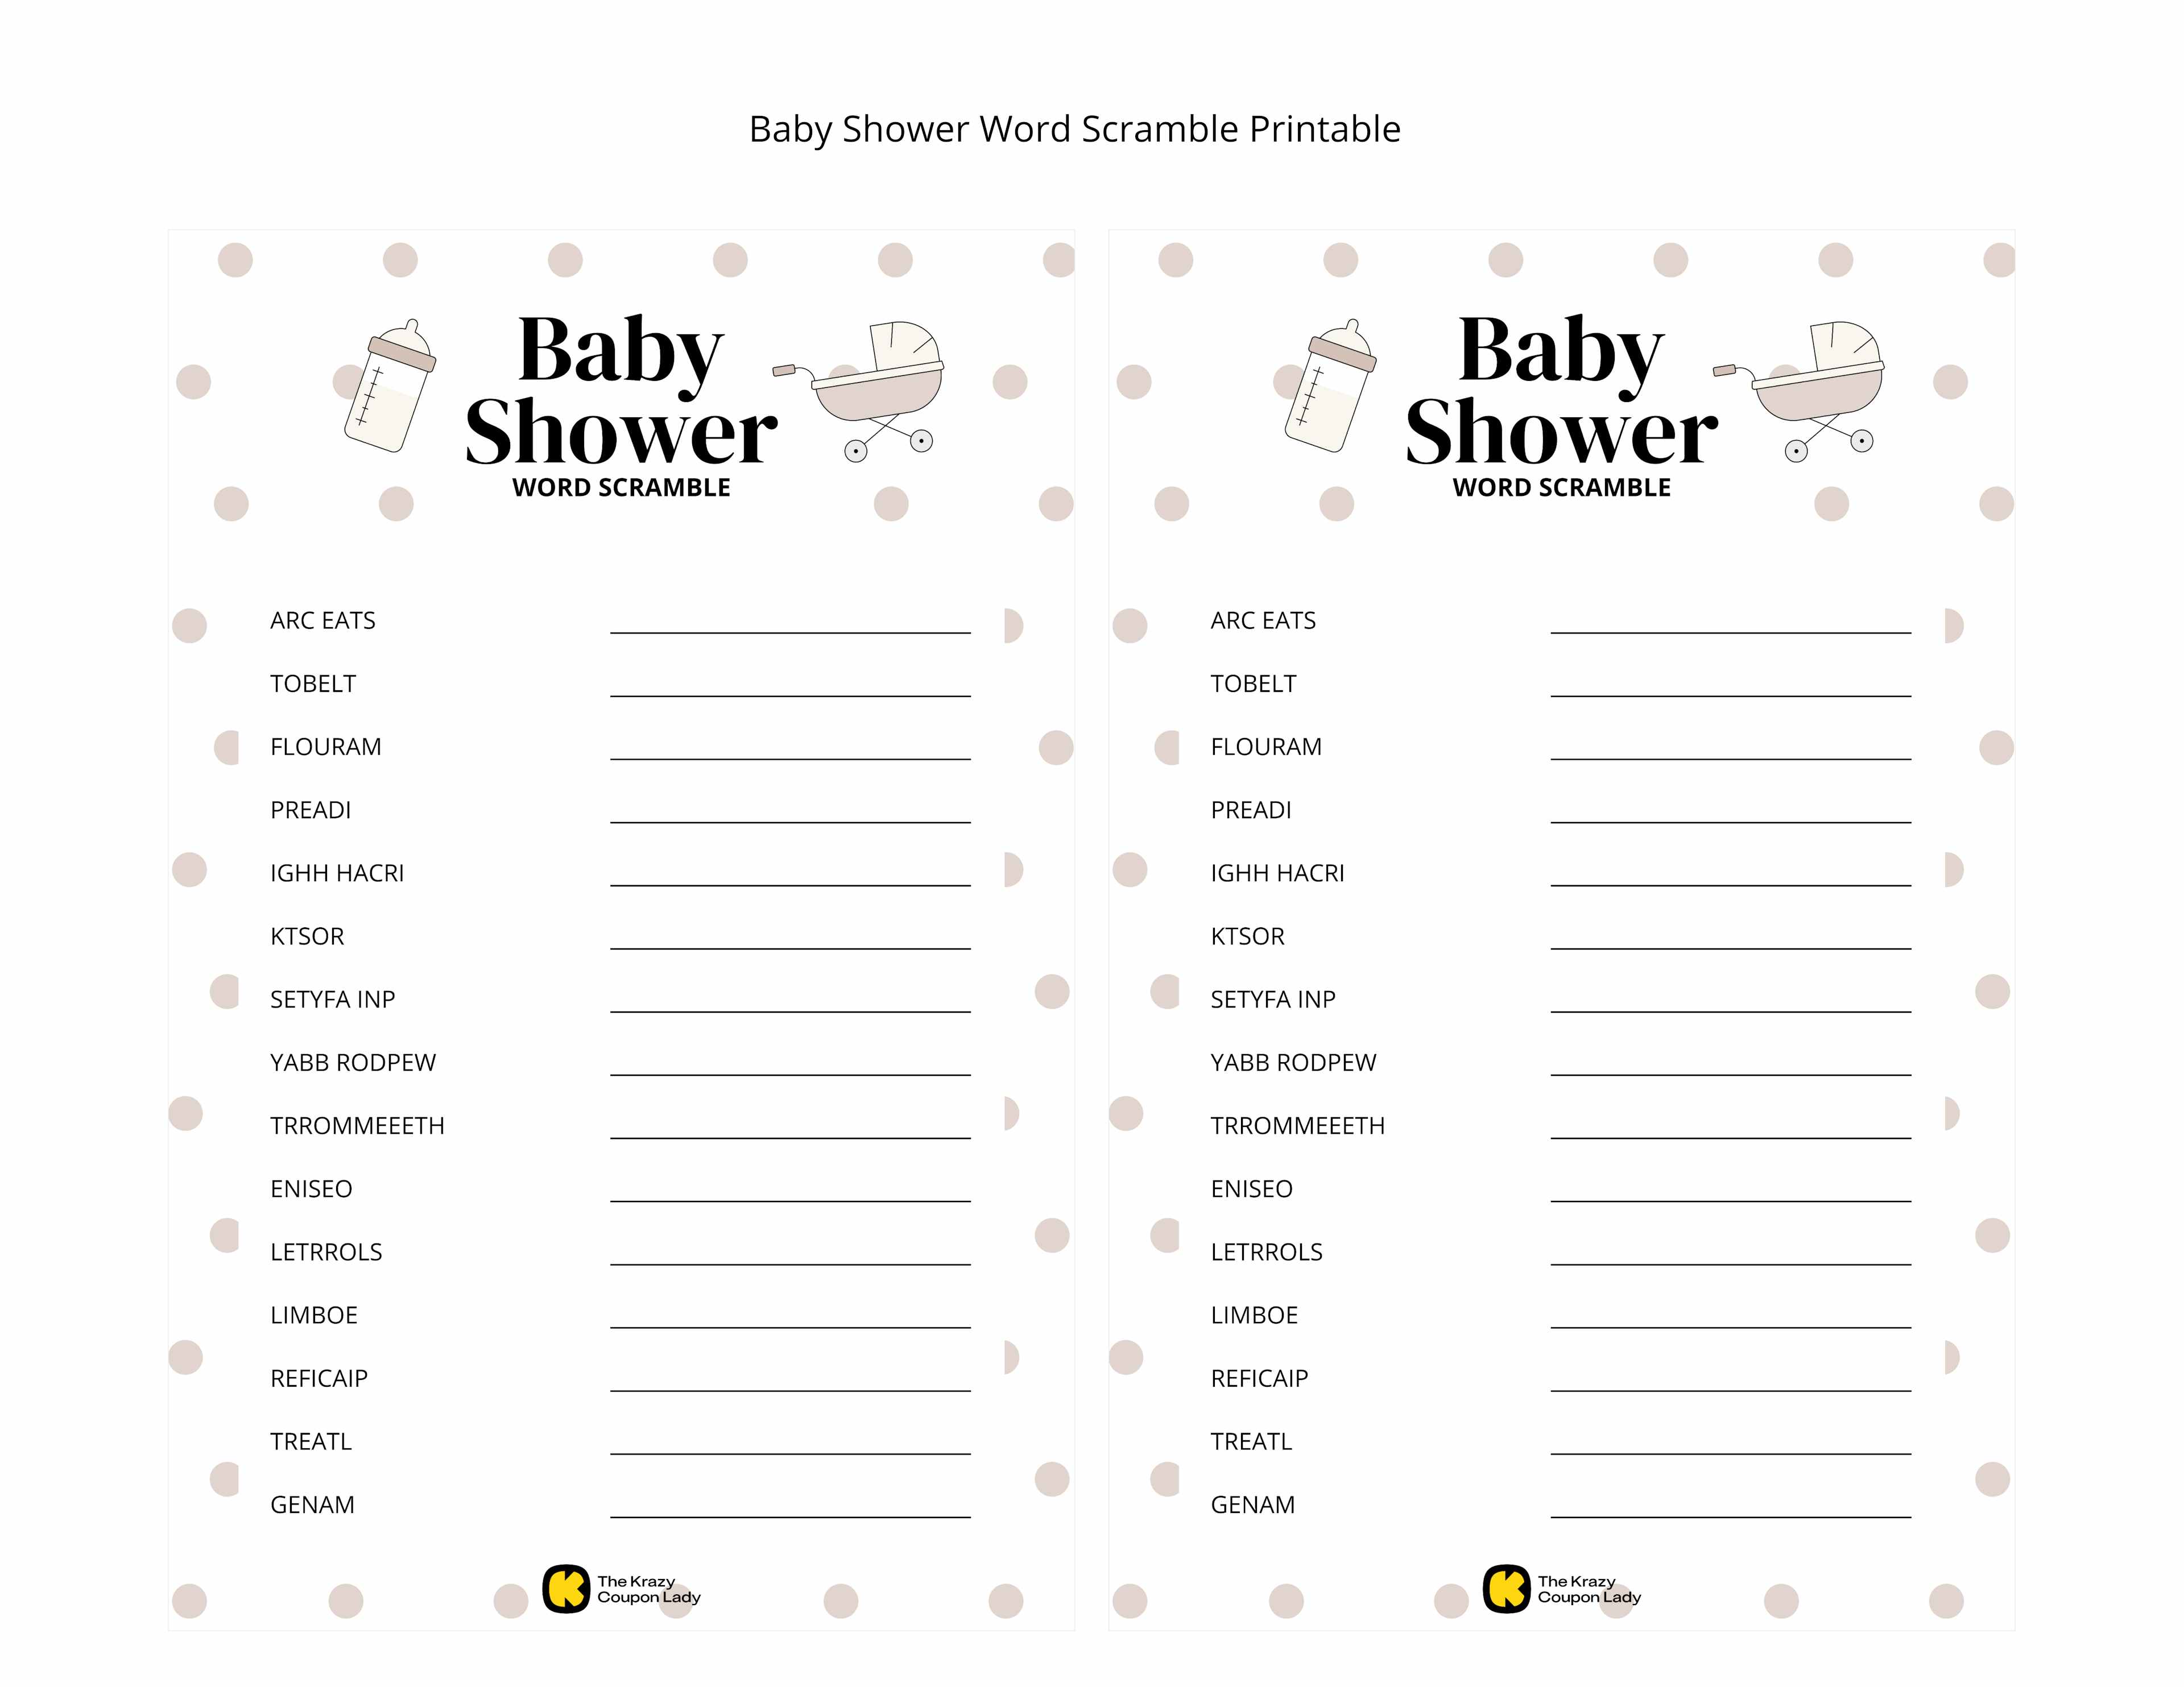 Baby Shower Word Scramble game printable